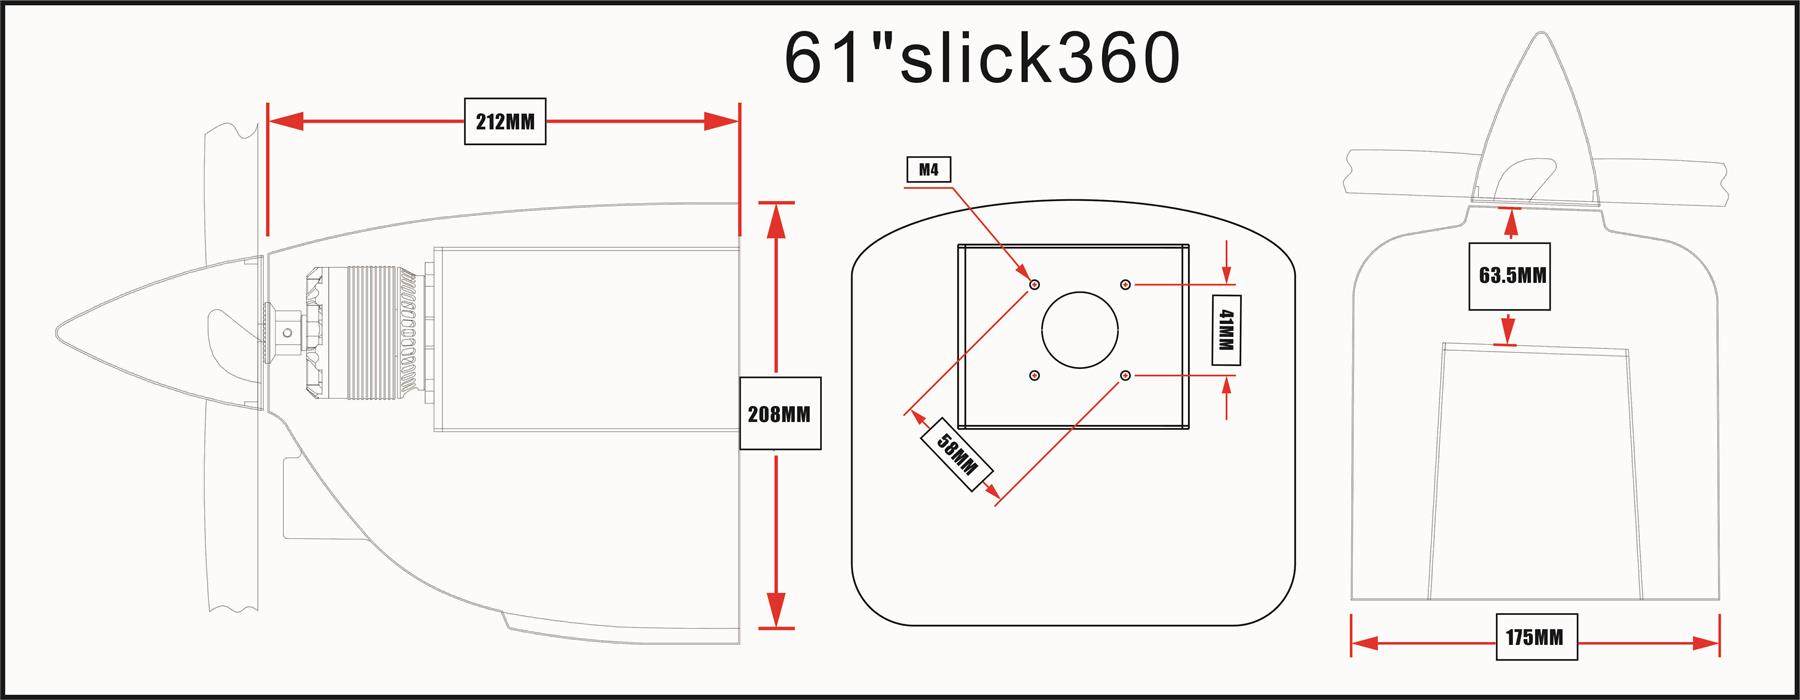 SLICK 360 - 61 V2 - weiß/grün/blau - C - PNP